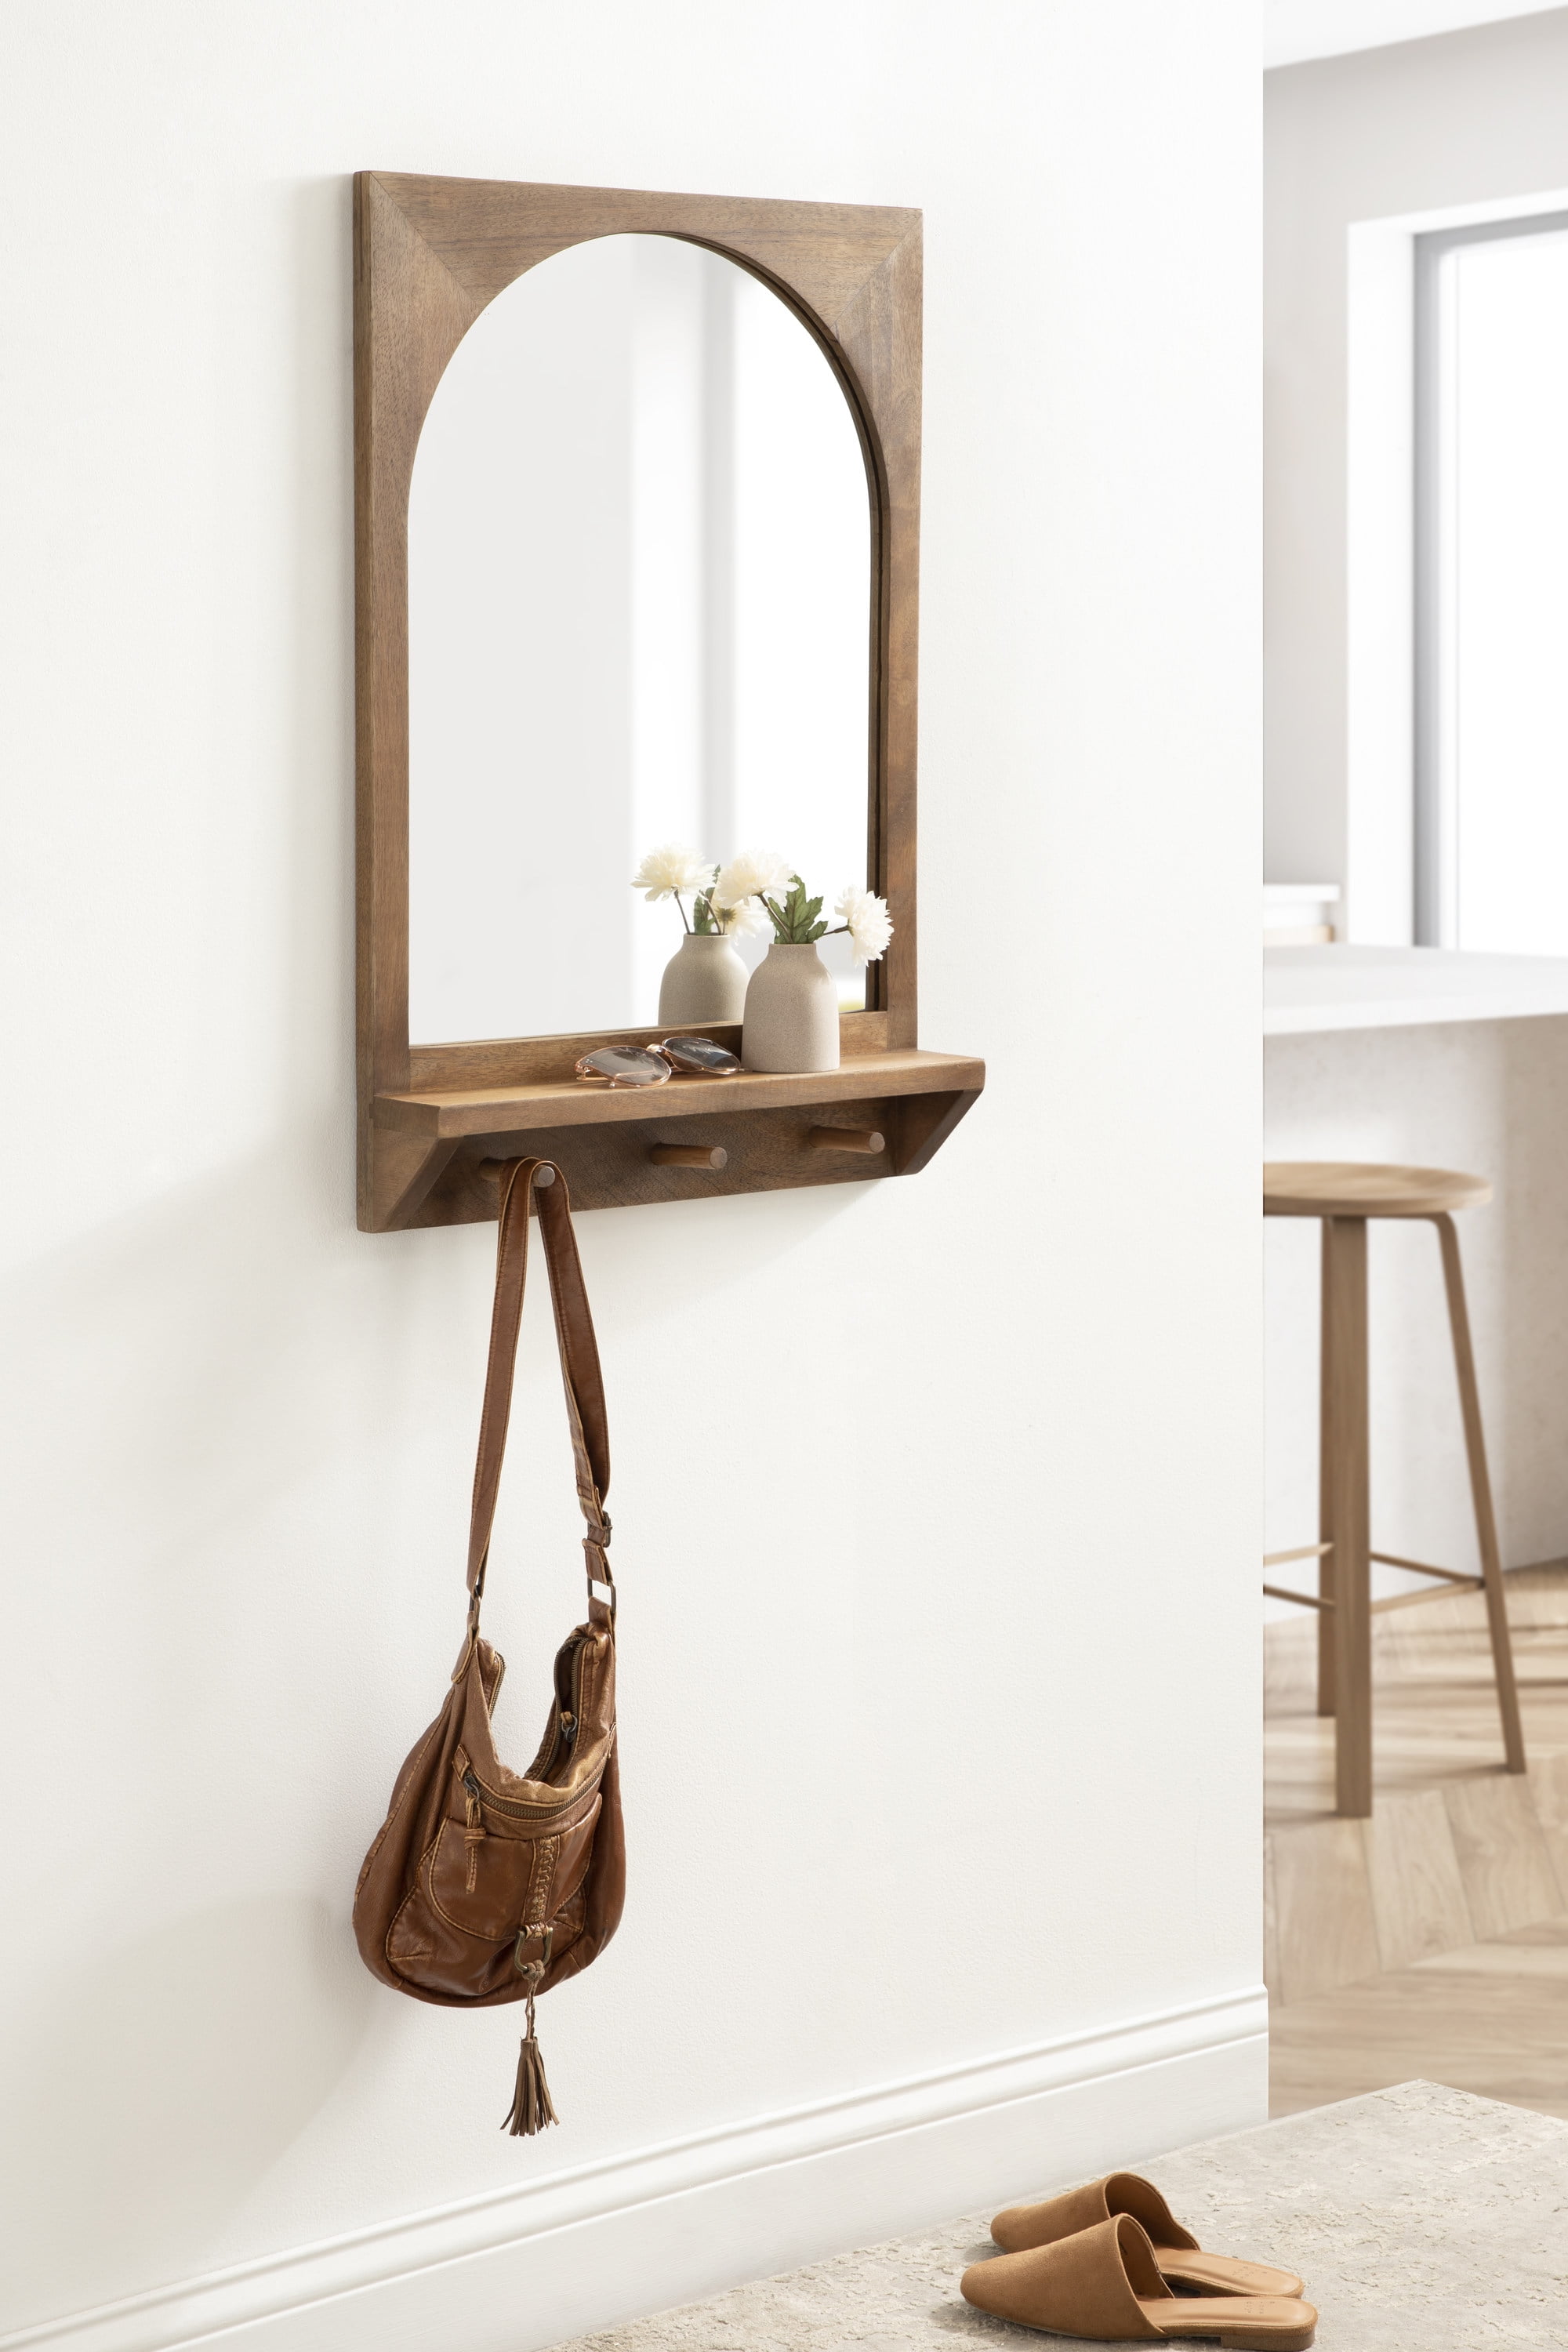 Homfa Wall Mirror with Shelf, 3 Hanging Hooks of Wood Frame